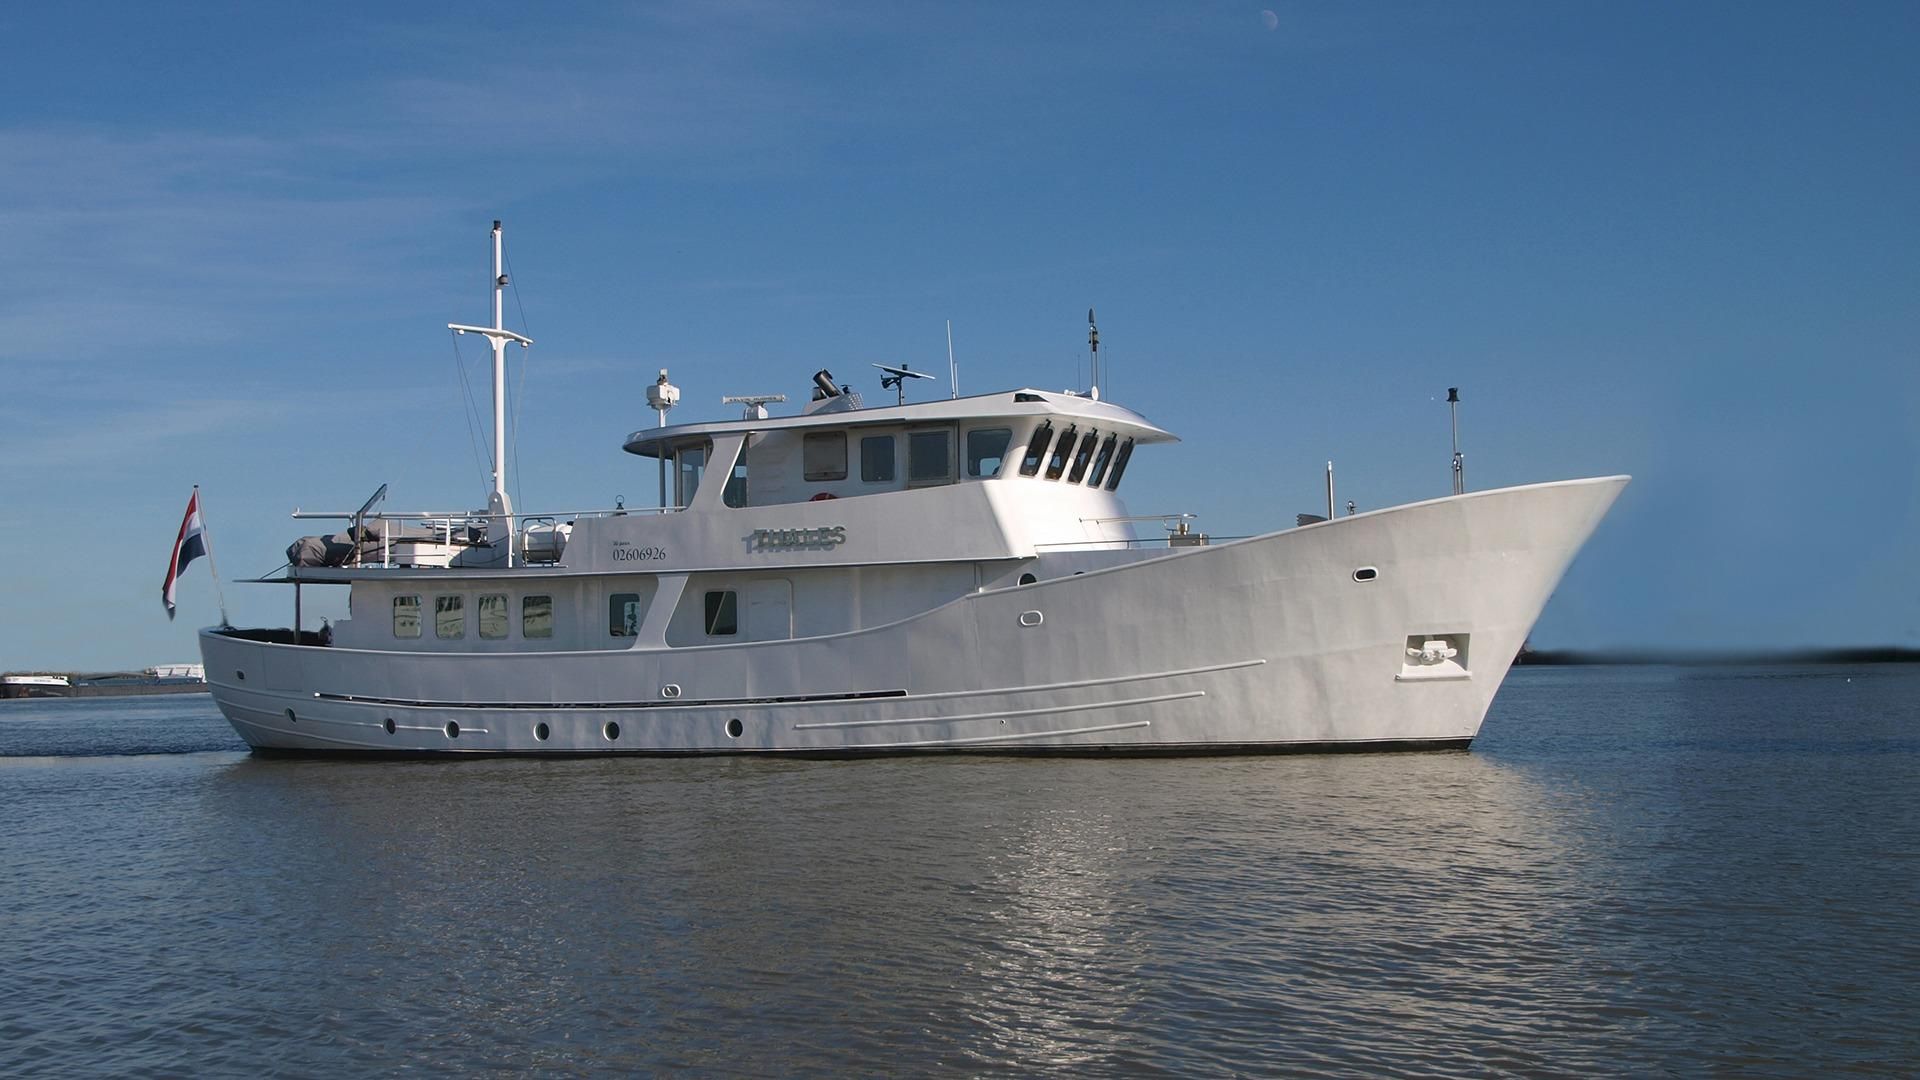 2003 Metz Roode Trawler Charter Power Boat For Sale - www ...